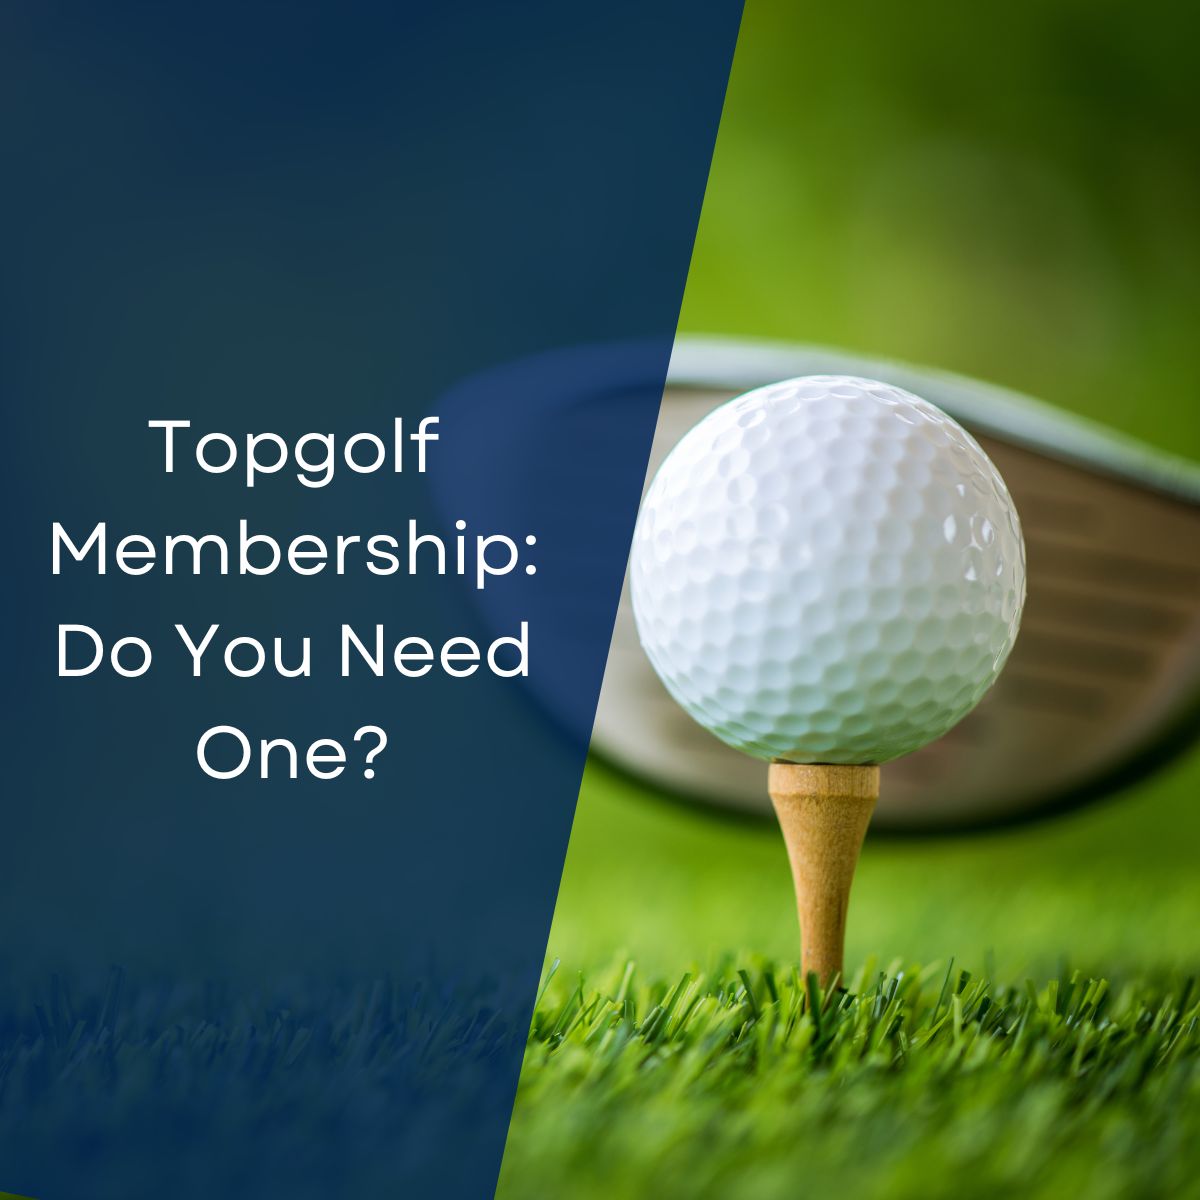 Topgolf Membership: Do You Need One?